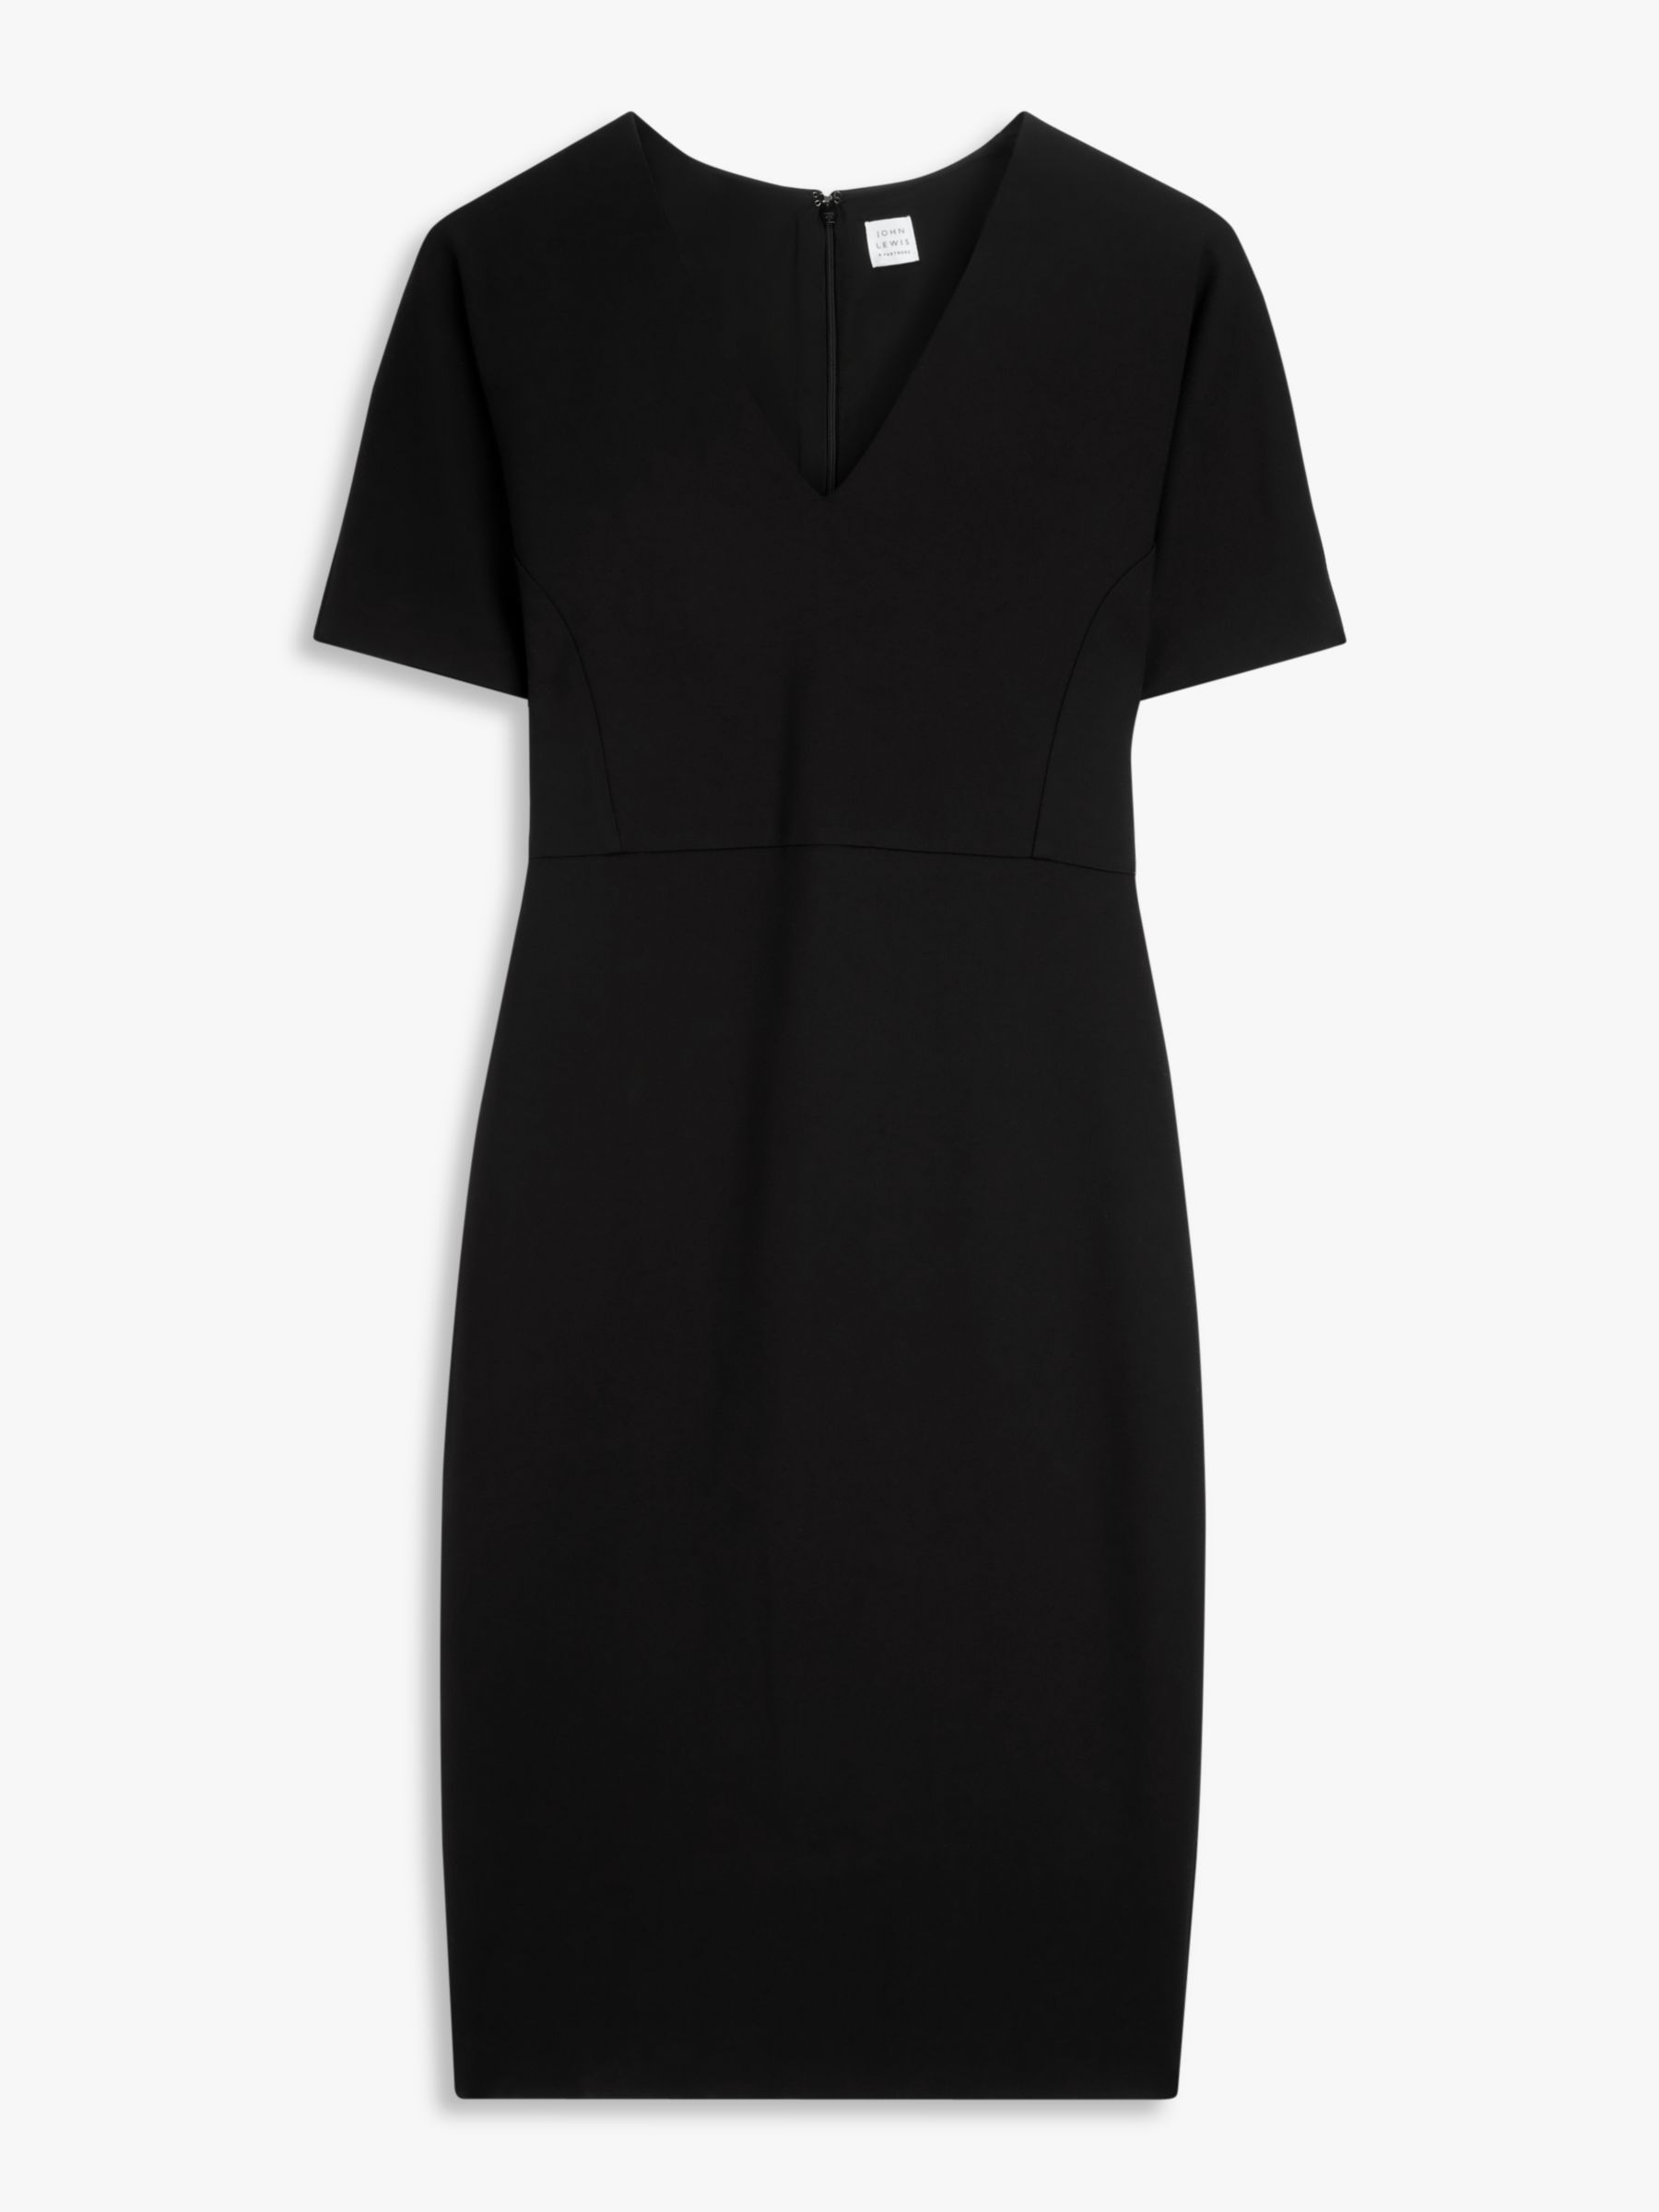 John Lewis Taylor Ponte Short Sleeve Dress, Black at John Lewis & Partners